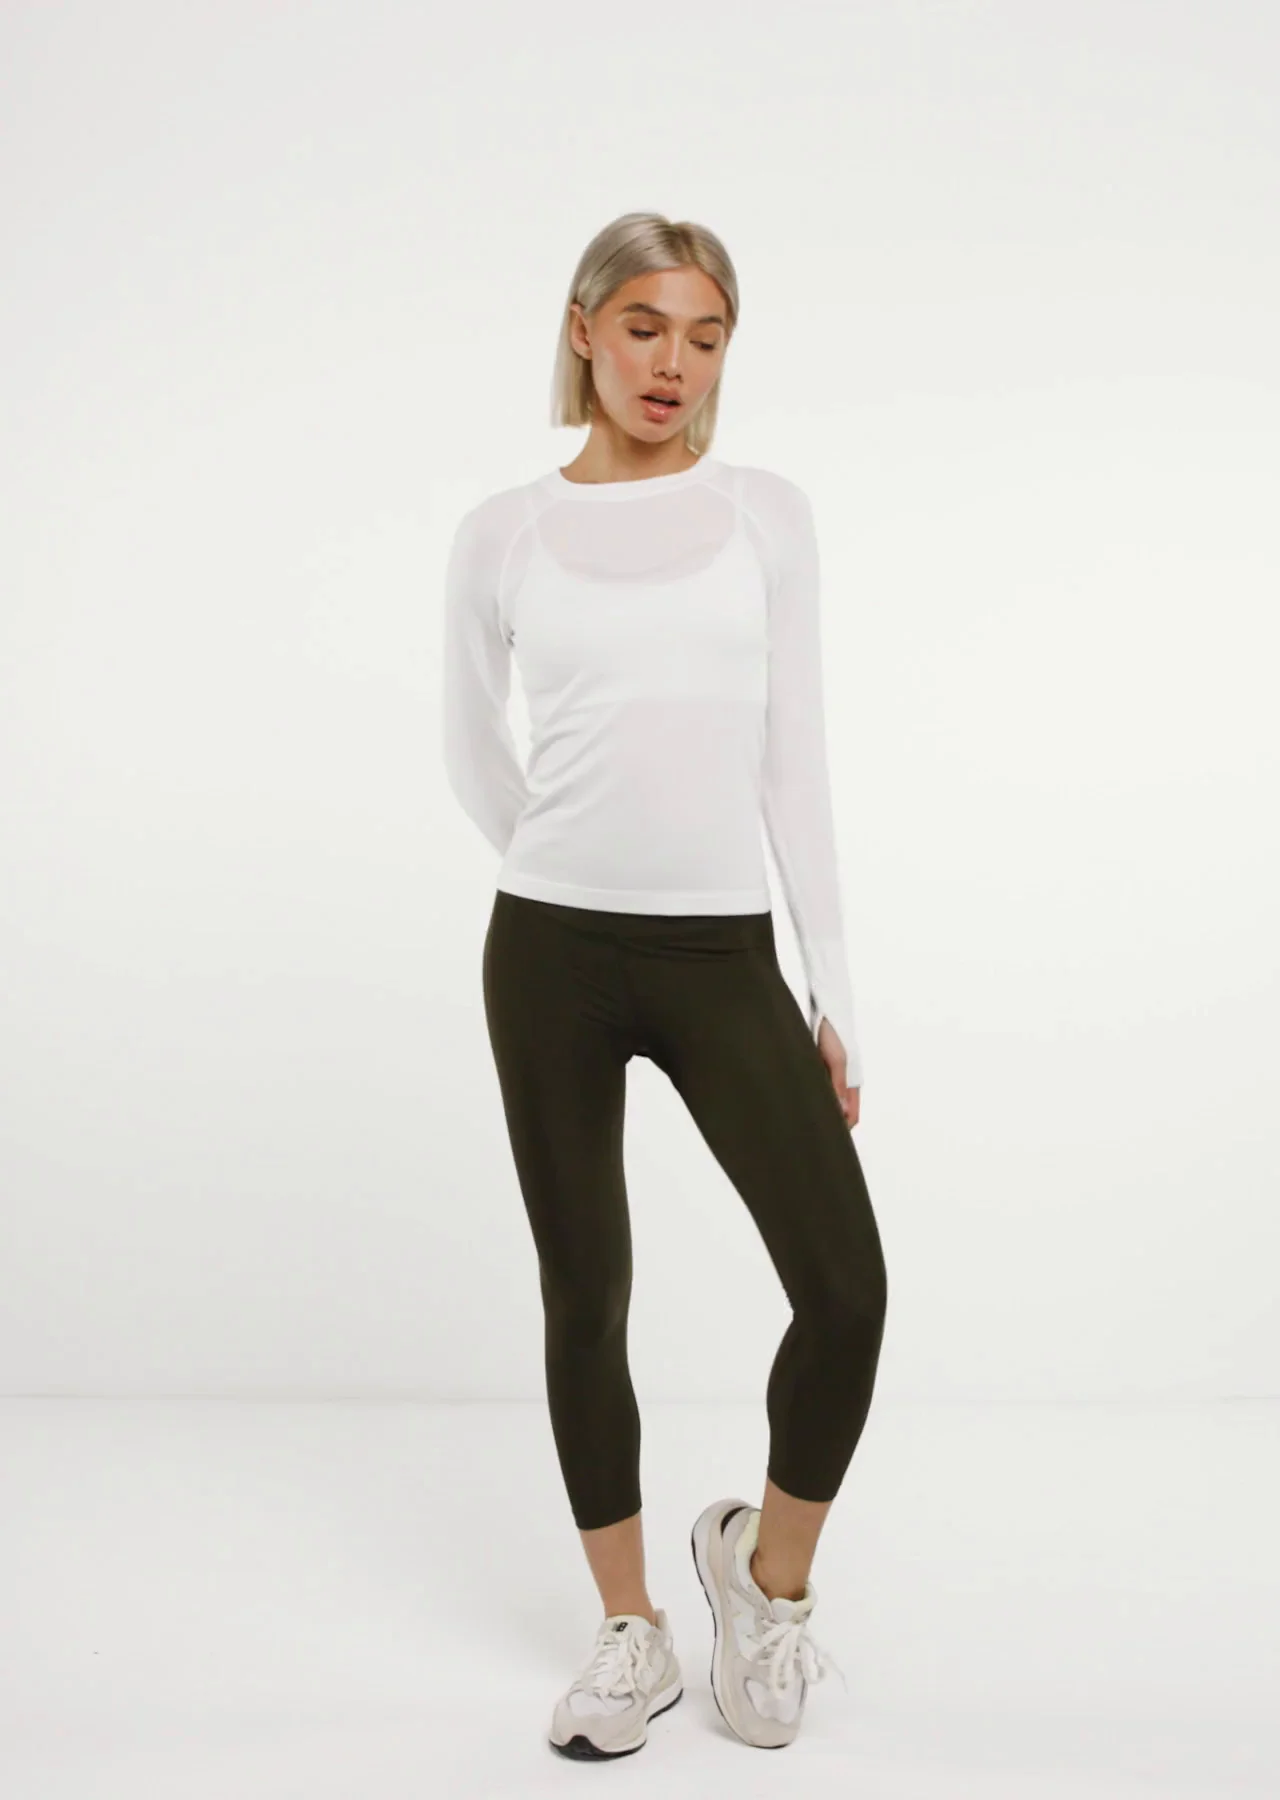 $70 Dynamic Seamless Long Sleeve | Women's Activewear